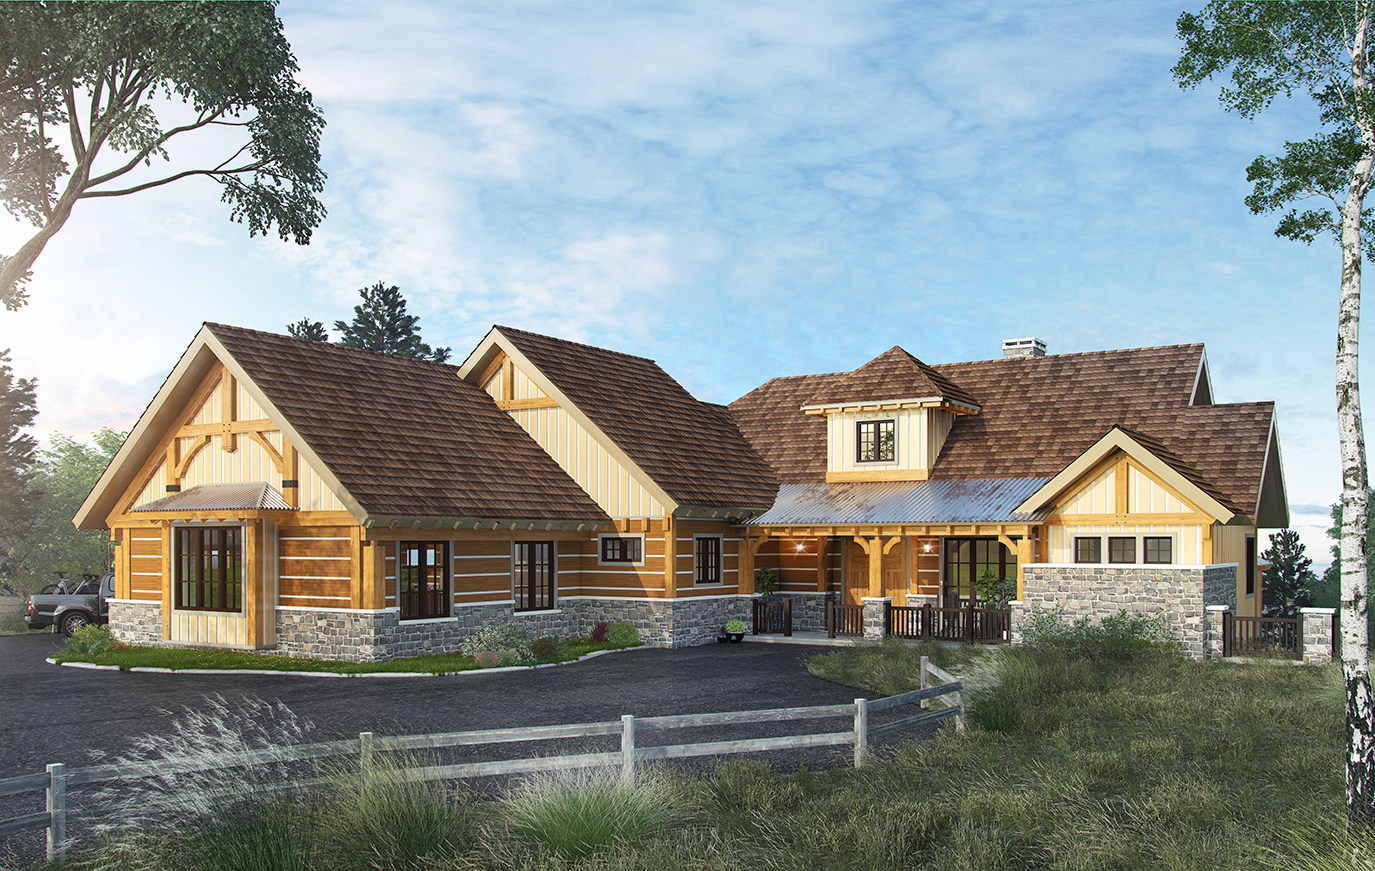 Dream Homes Plans Inspirational Home Country Farmhouse House